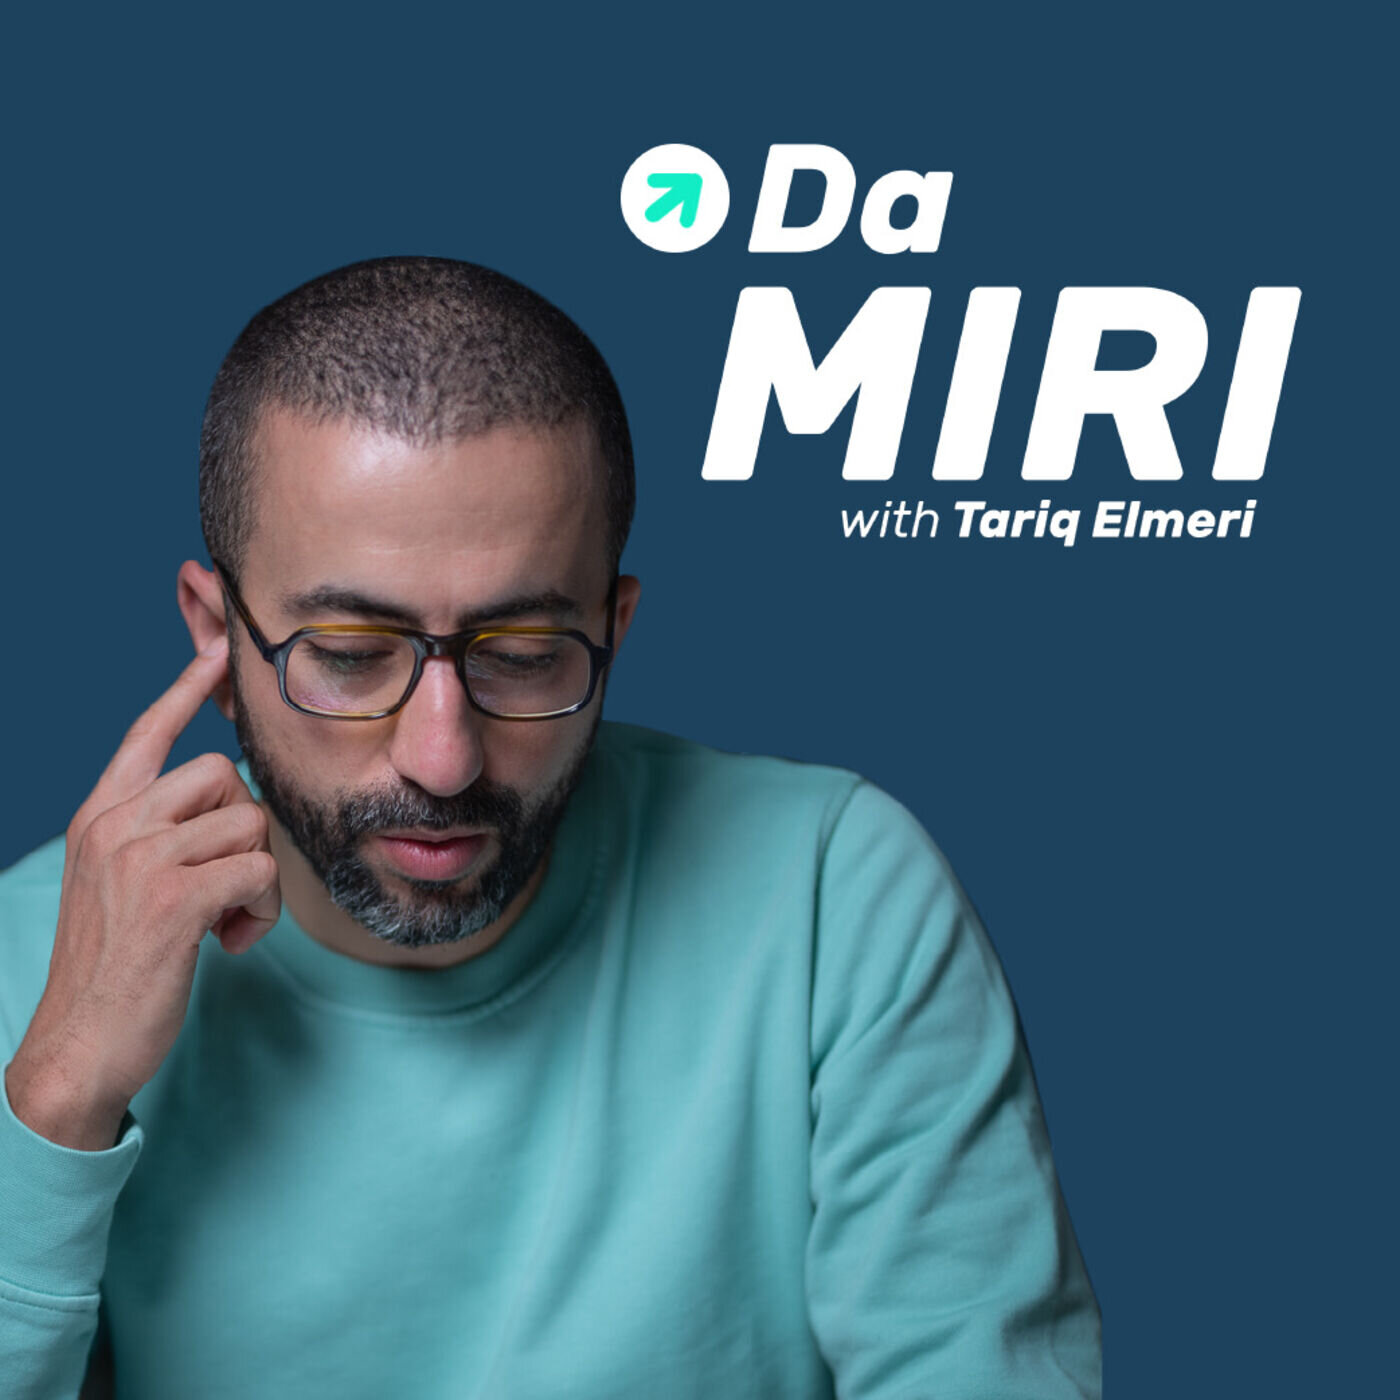 Tariq is the host and producer of Da Miri